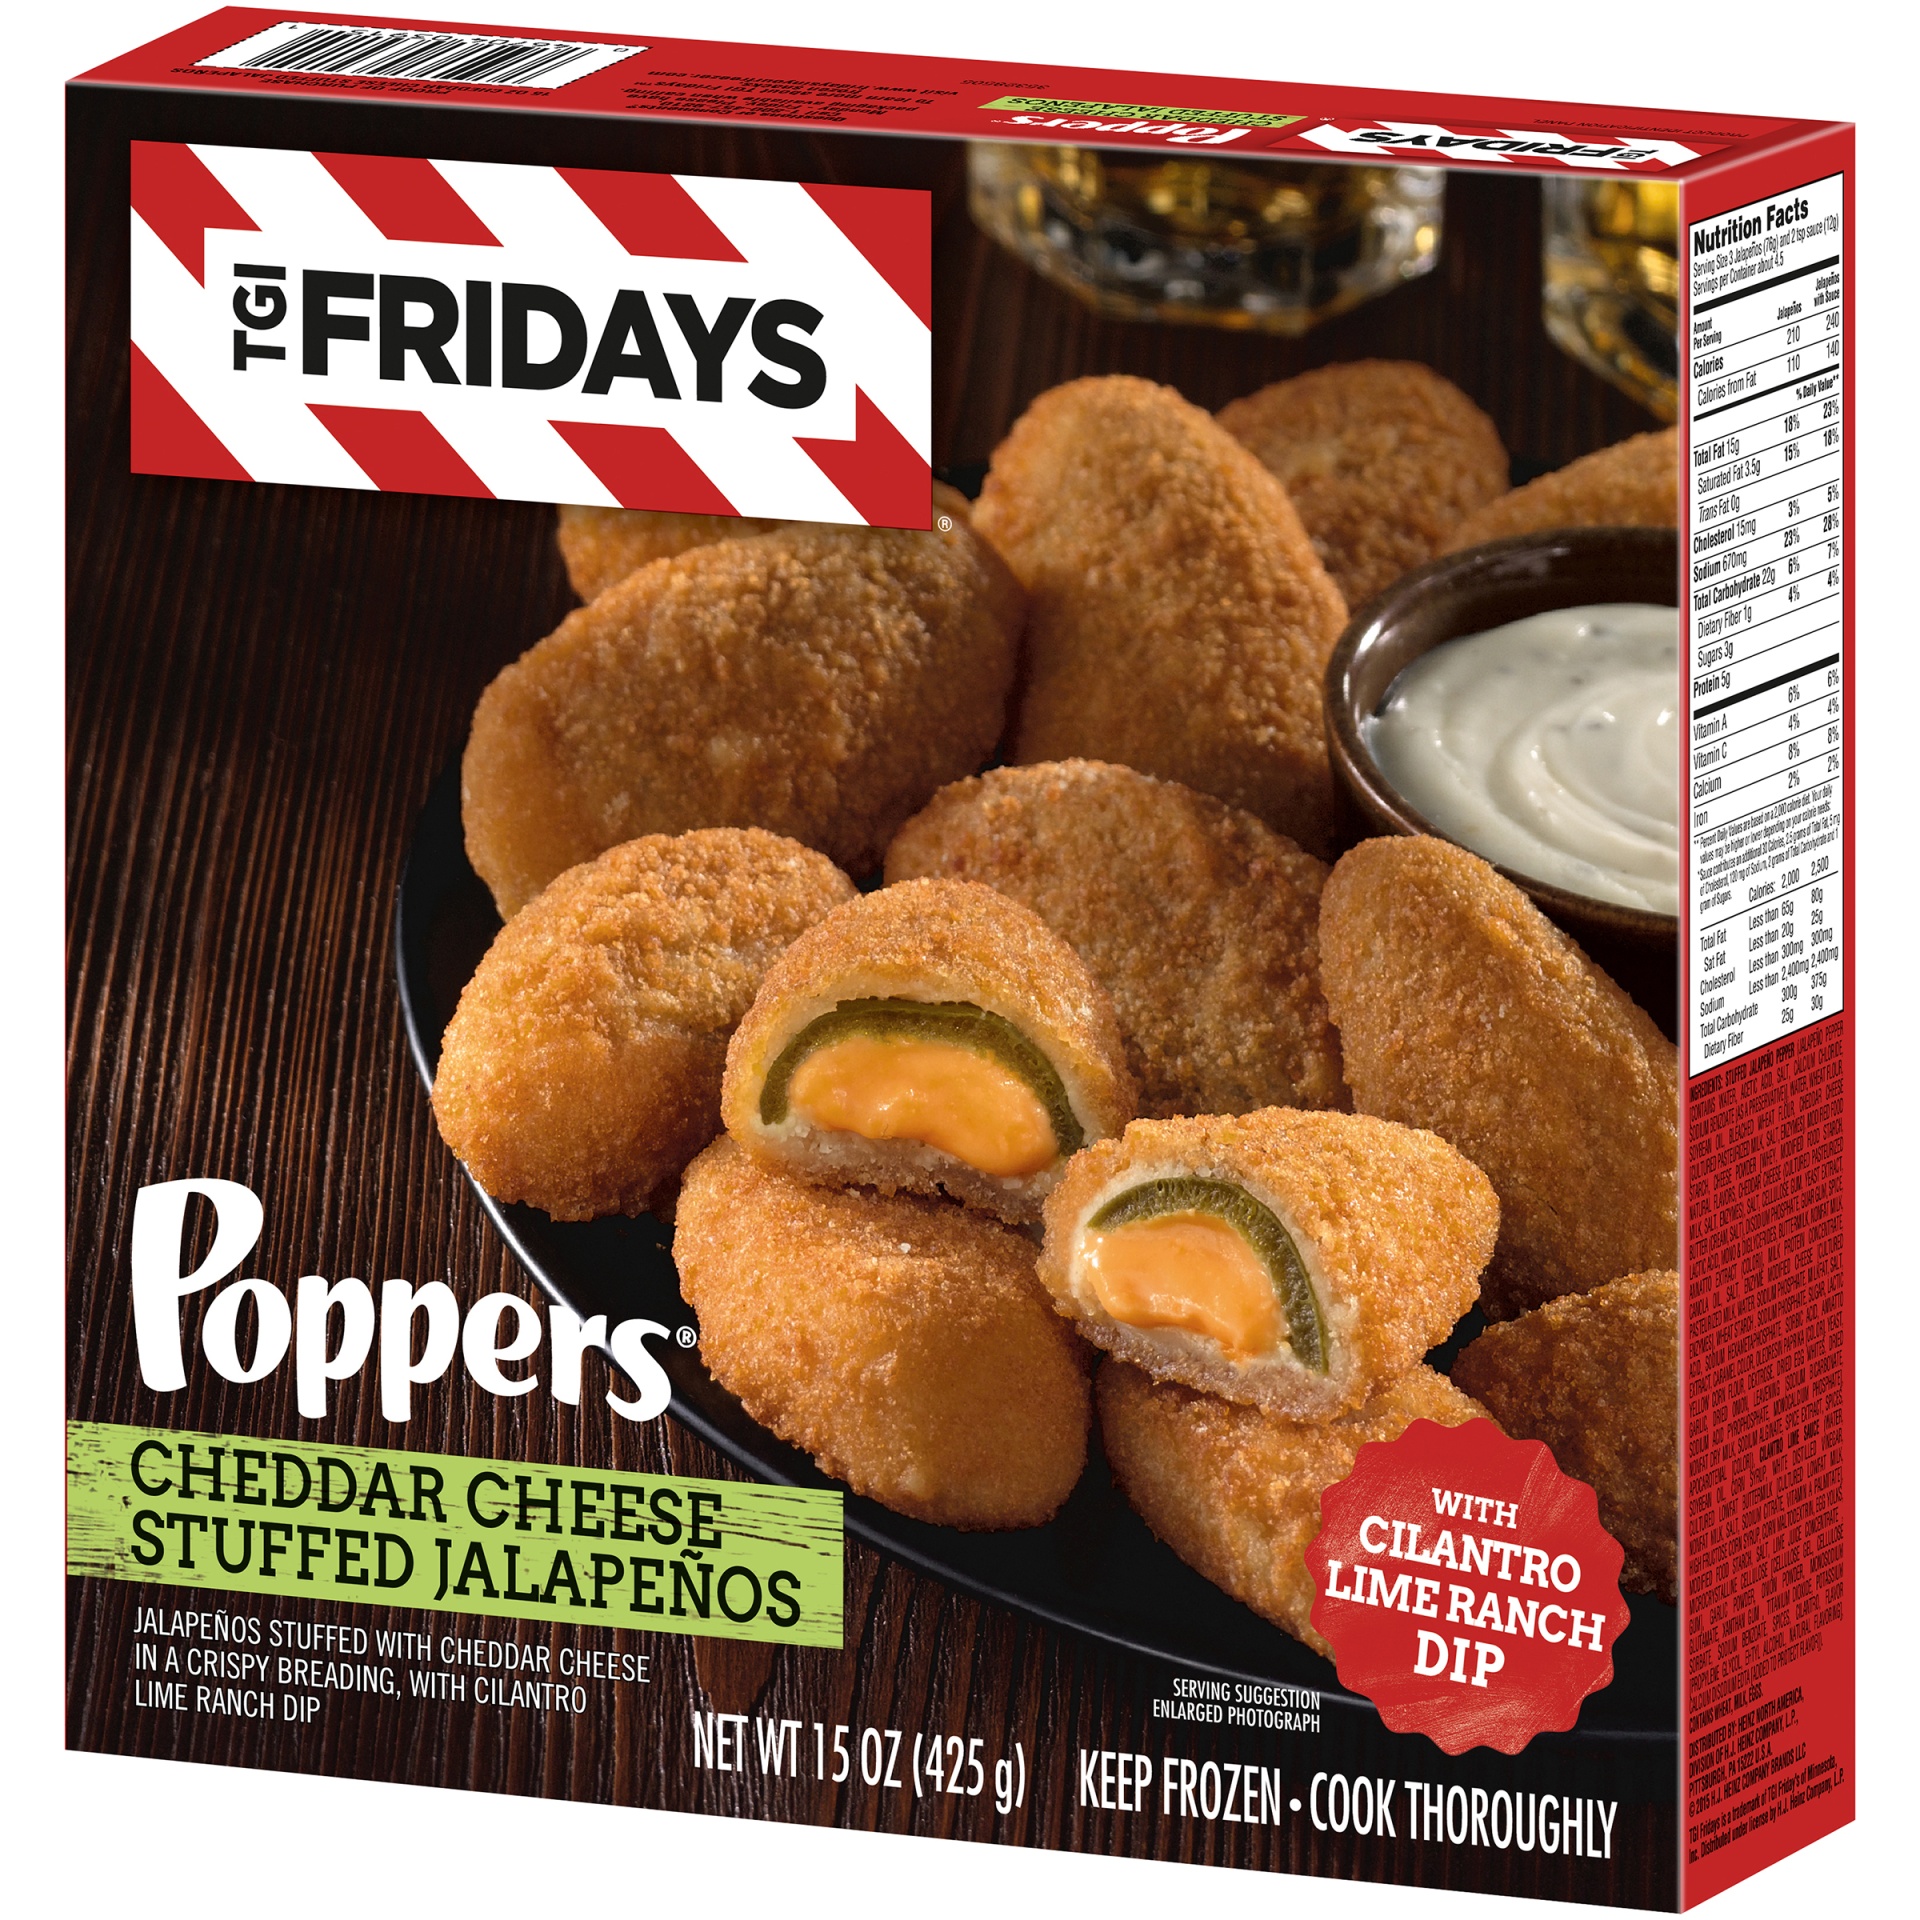 Tgi Fridays Cheddar Cheese Stuffed Jalapenos Poppers 15 Oz Shipt 